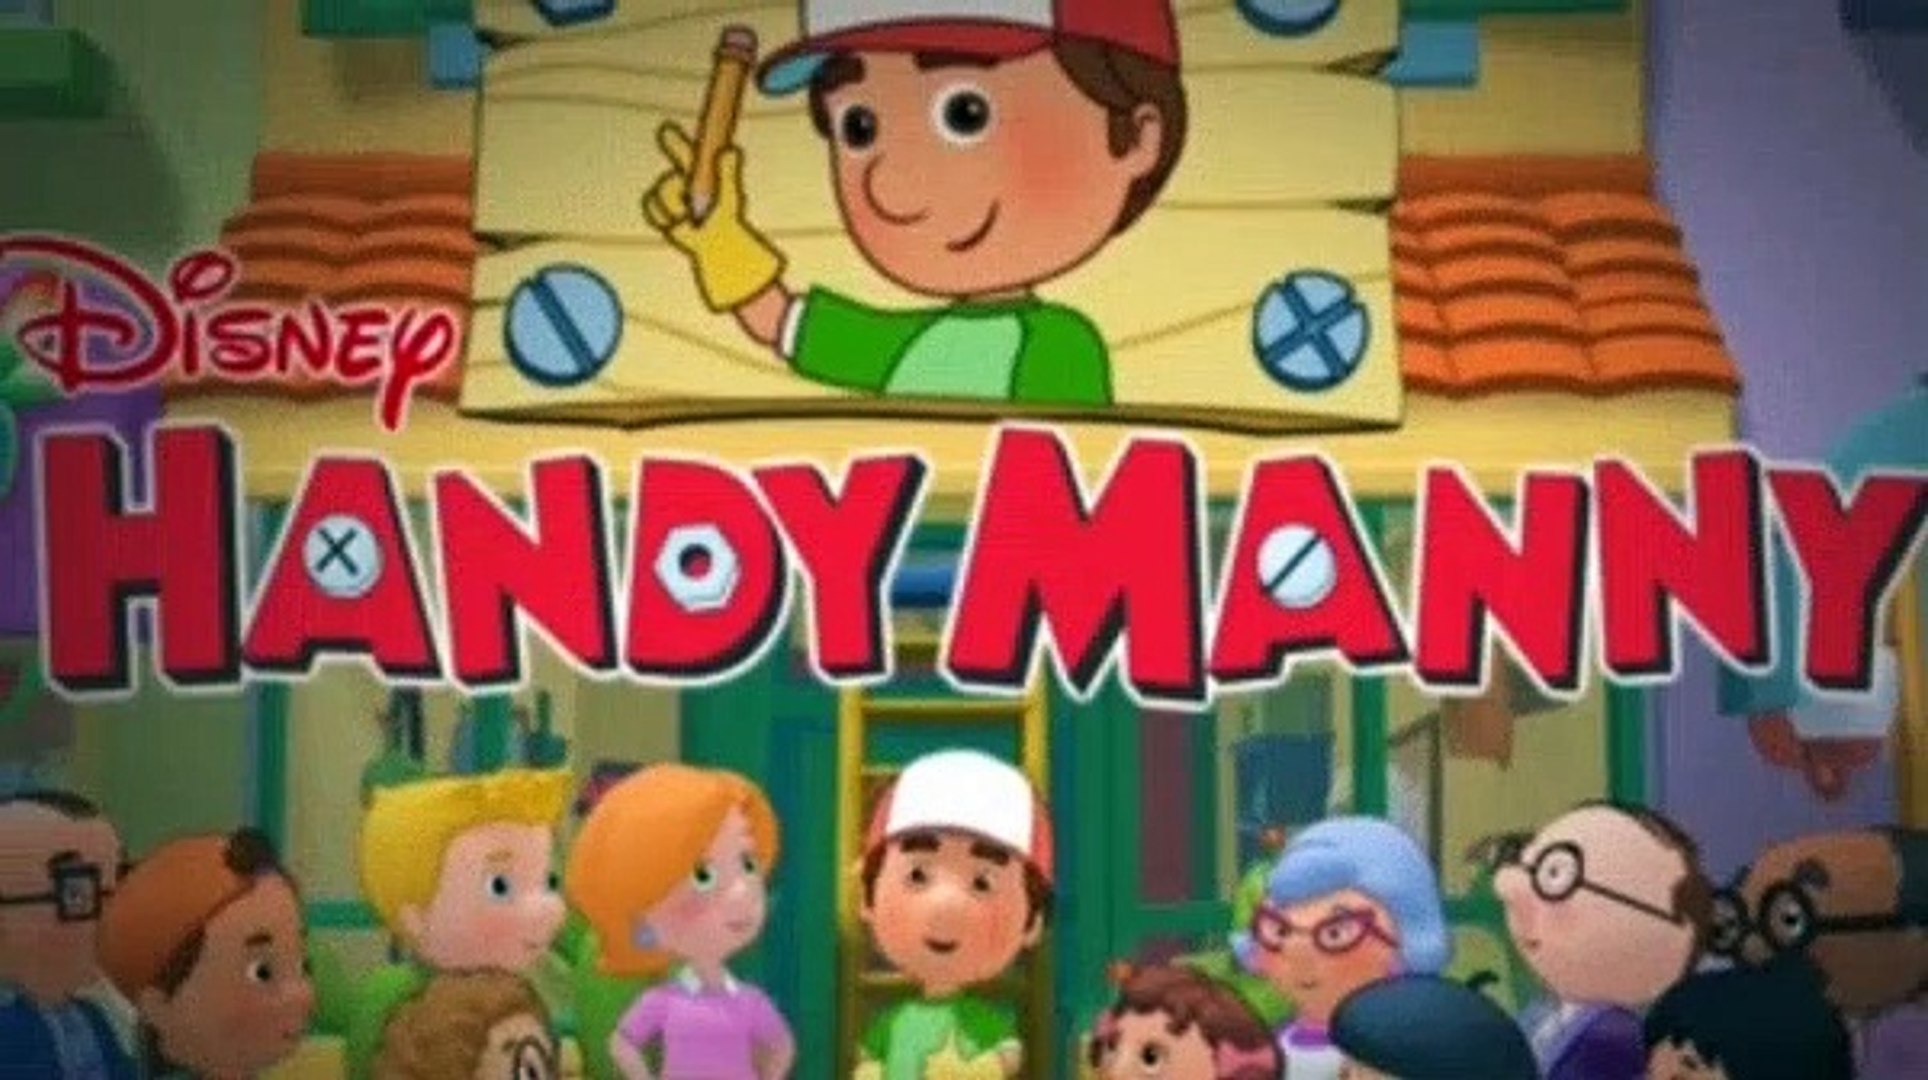 Handy Manny' hanky panky? When parents overthink kids' TV